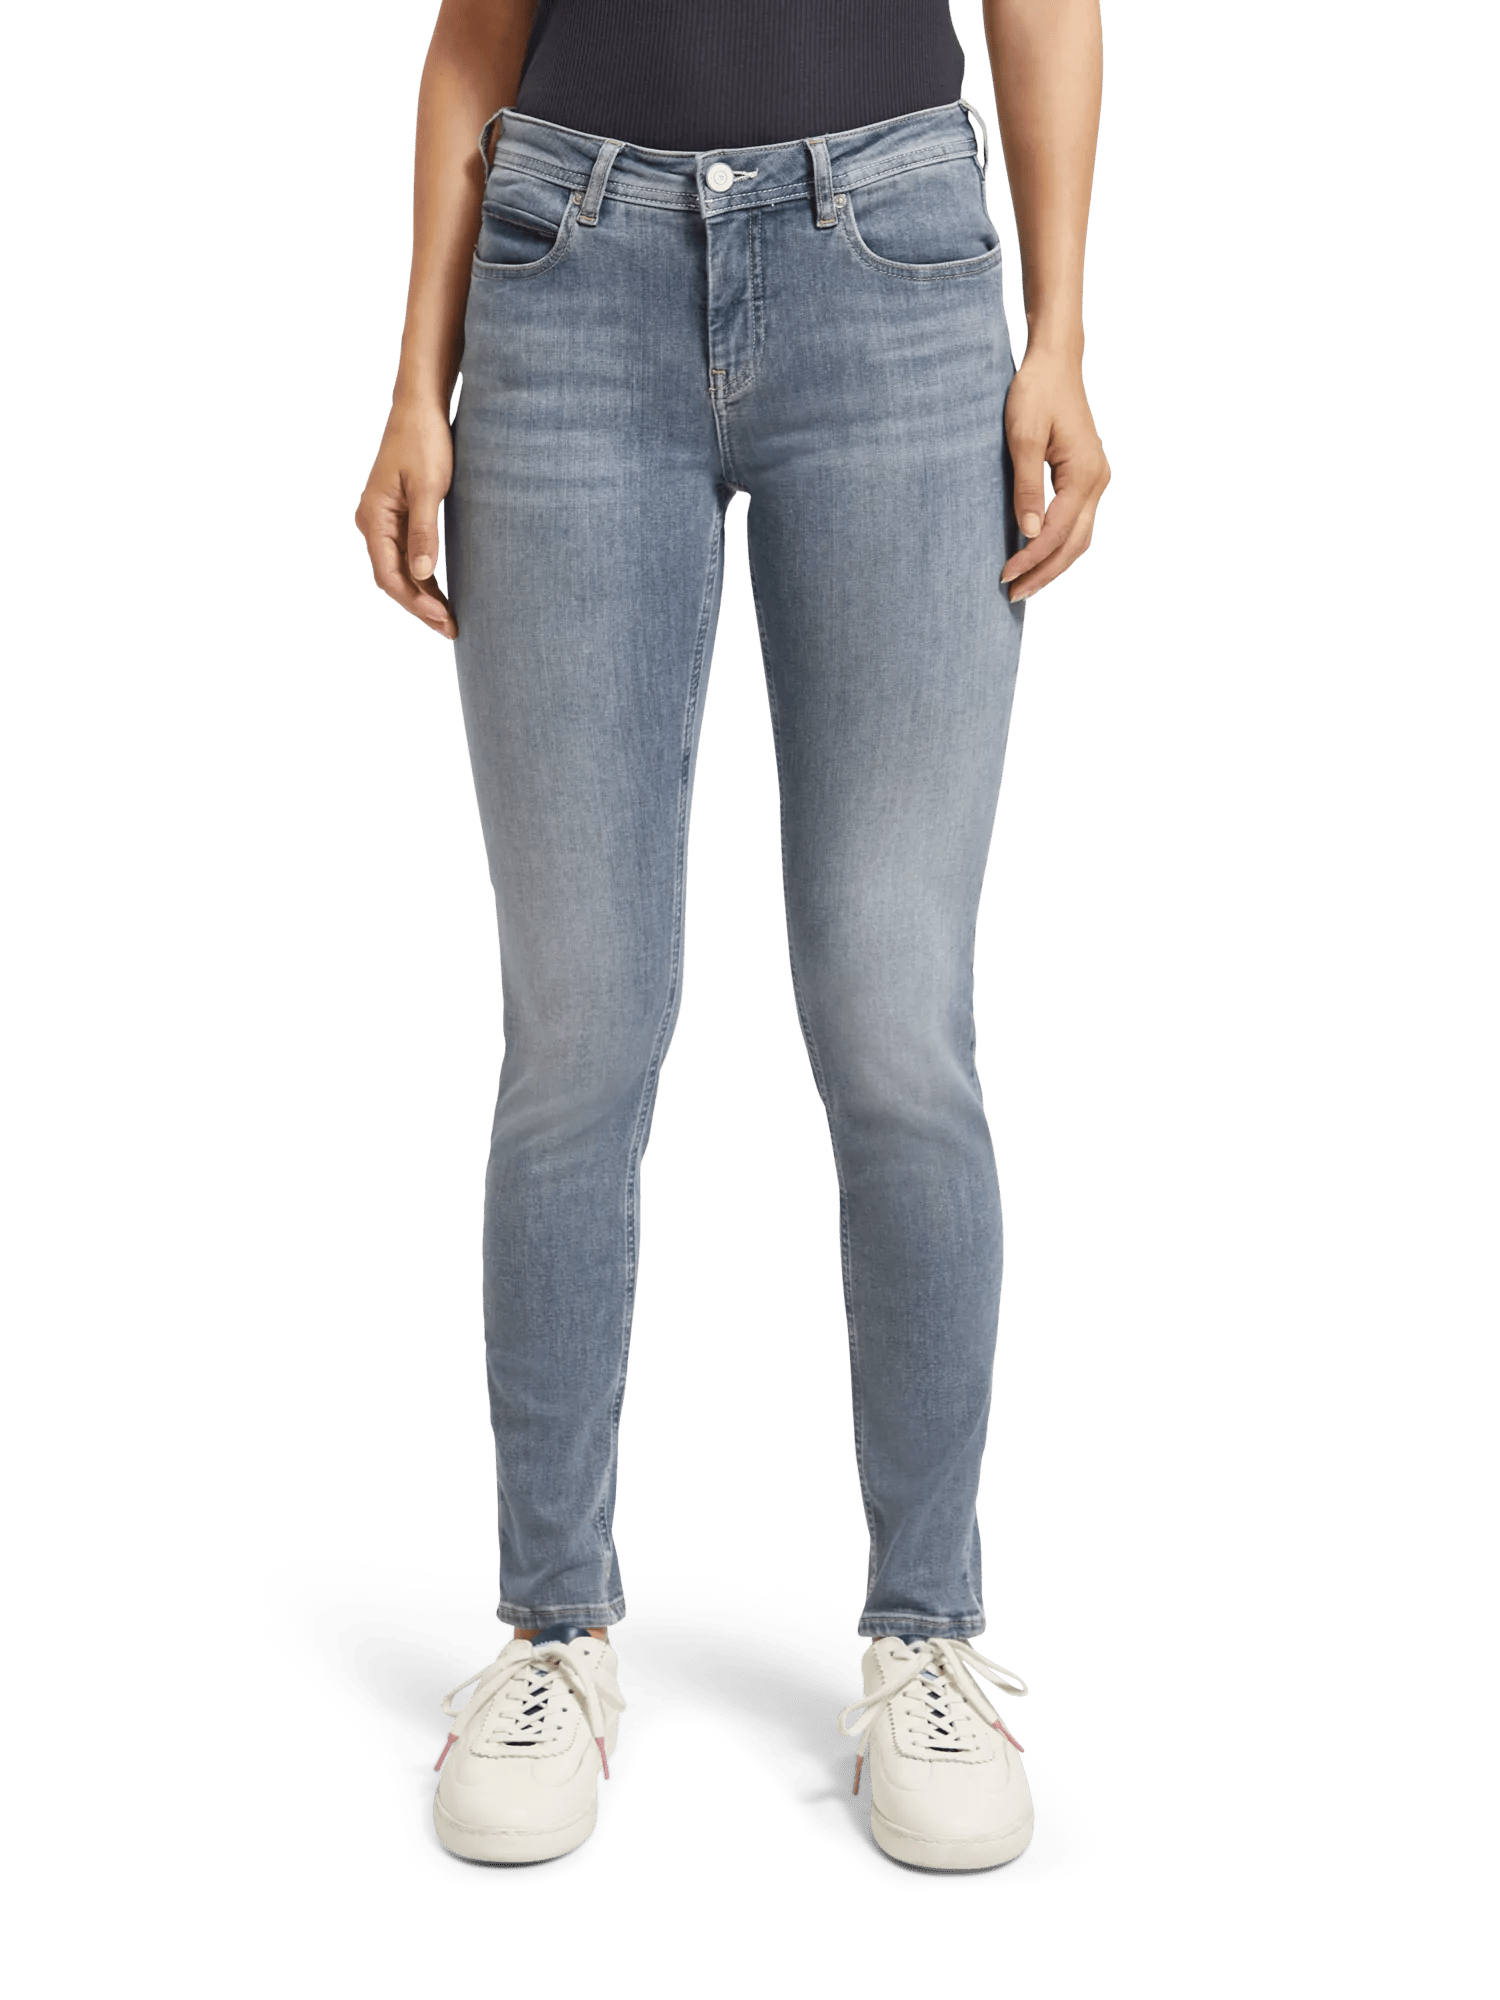 La Bohemienne mid-rise skinny jeans